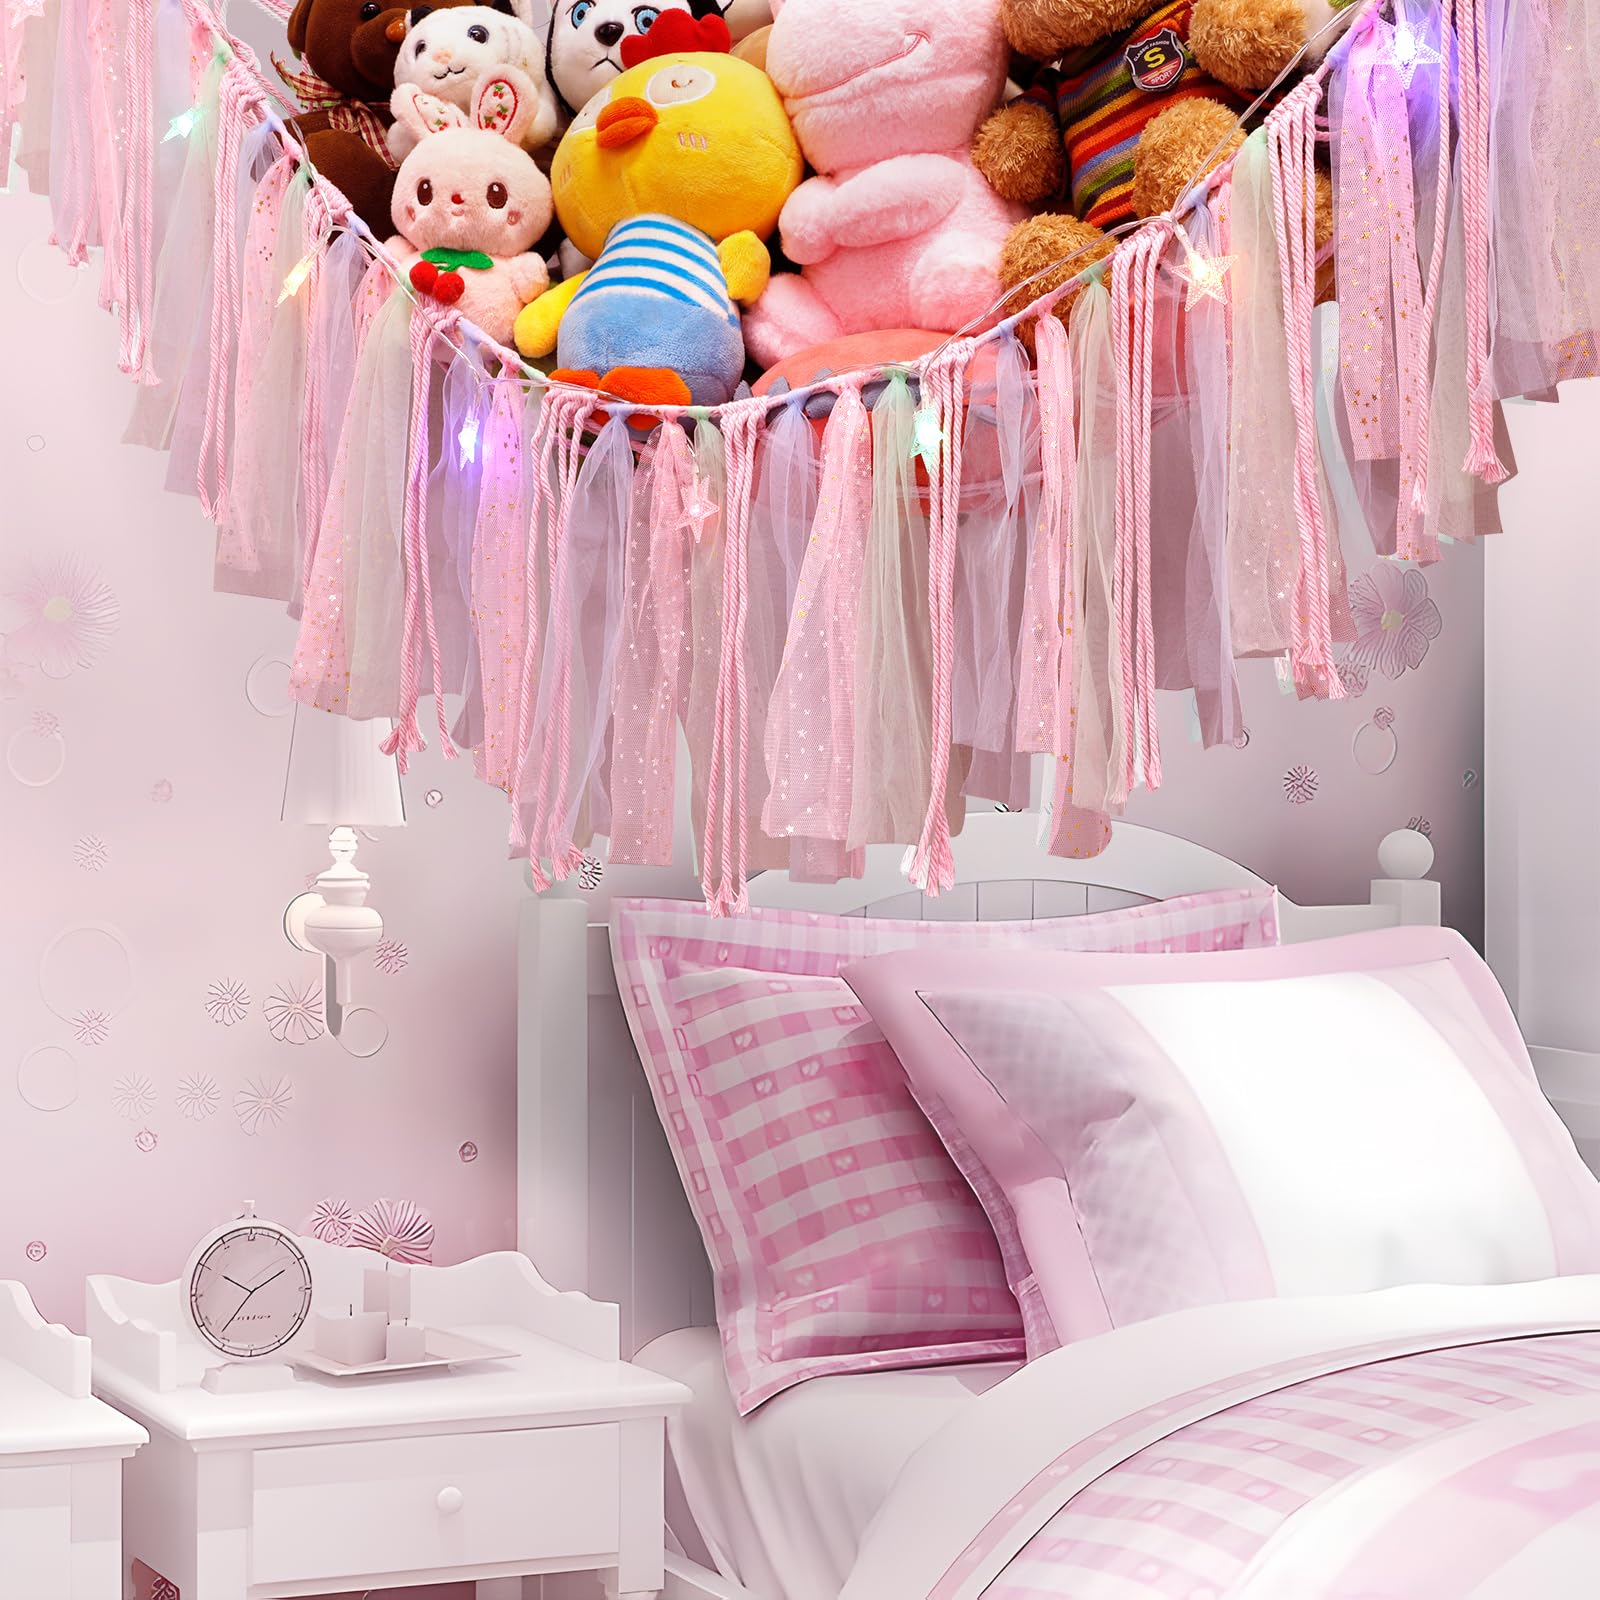 YELIENM Stuffed Animals Net or Hammock with LED Light, 59 inch Toy Hammock Net for Stuffed Animals Corner Hanging Stuffed Animal Storage Stuffed Animal Holder for Nursery Kids Bedroom (Pink)…